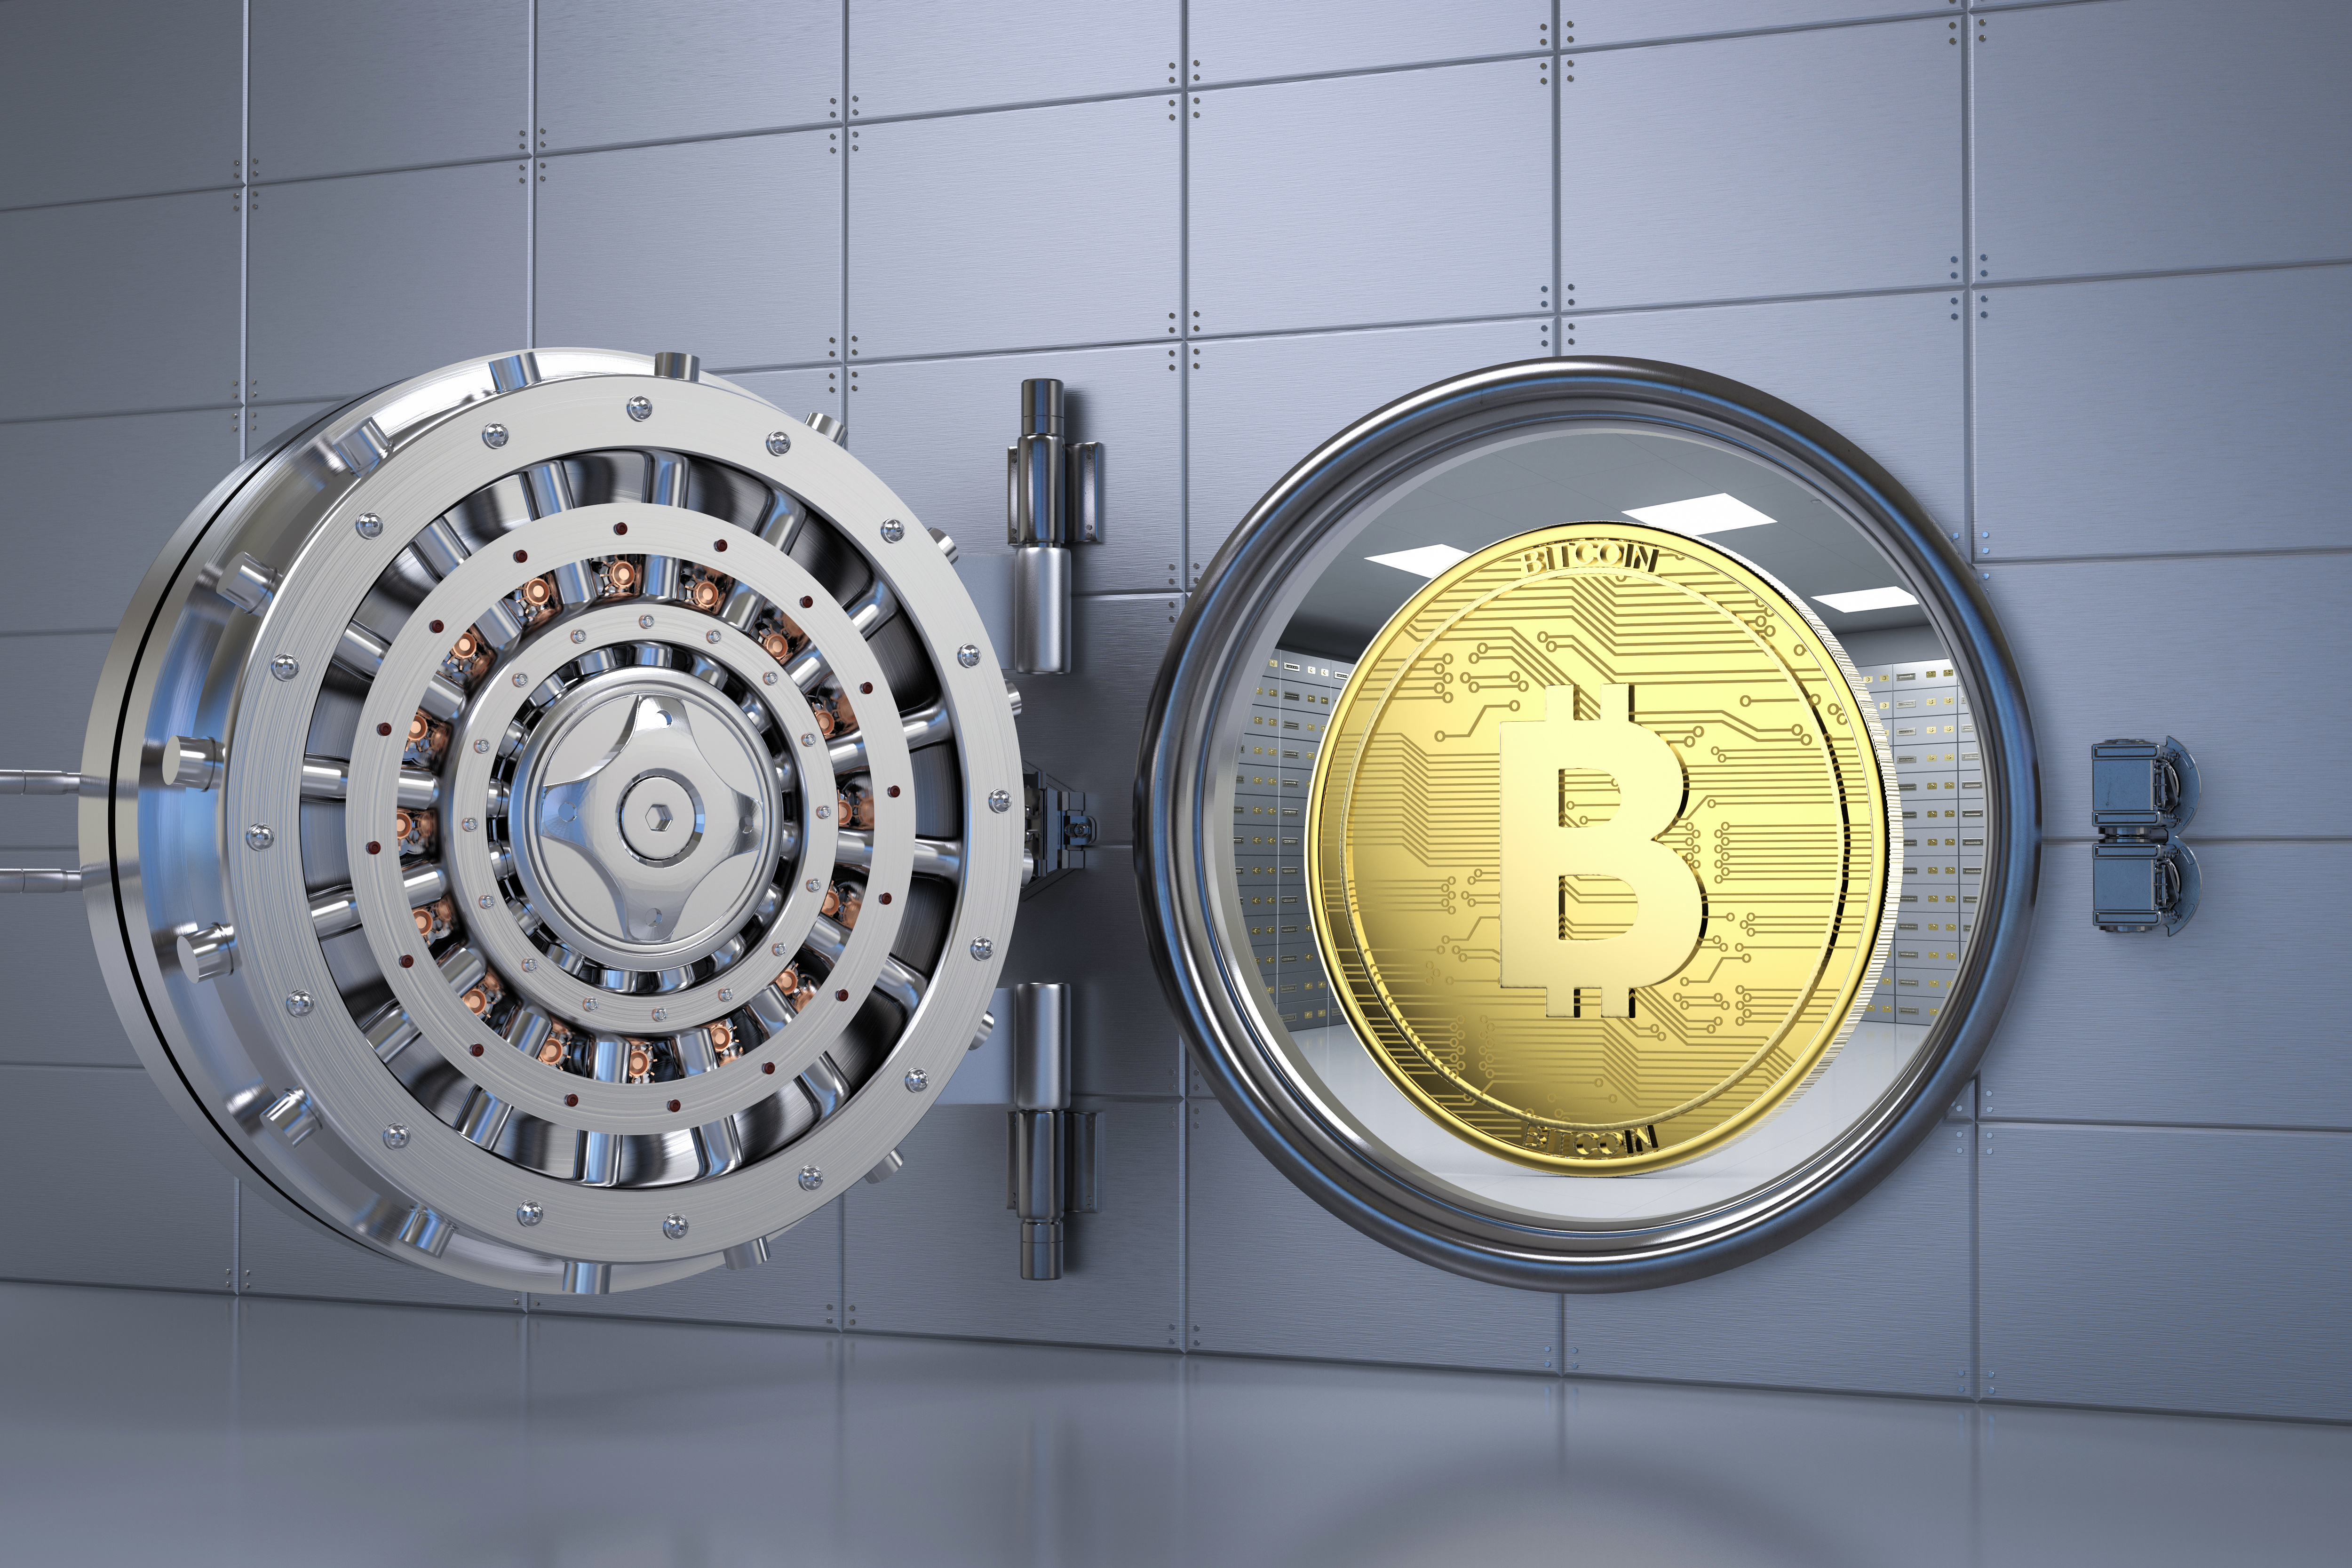 bitcoin in bank vault - Blackwell Global